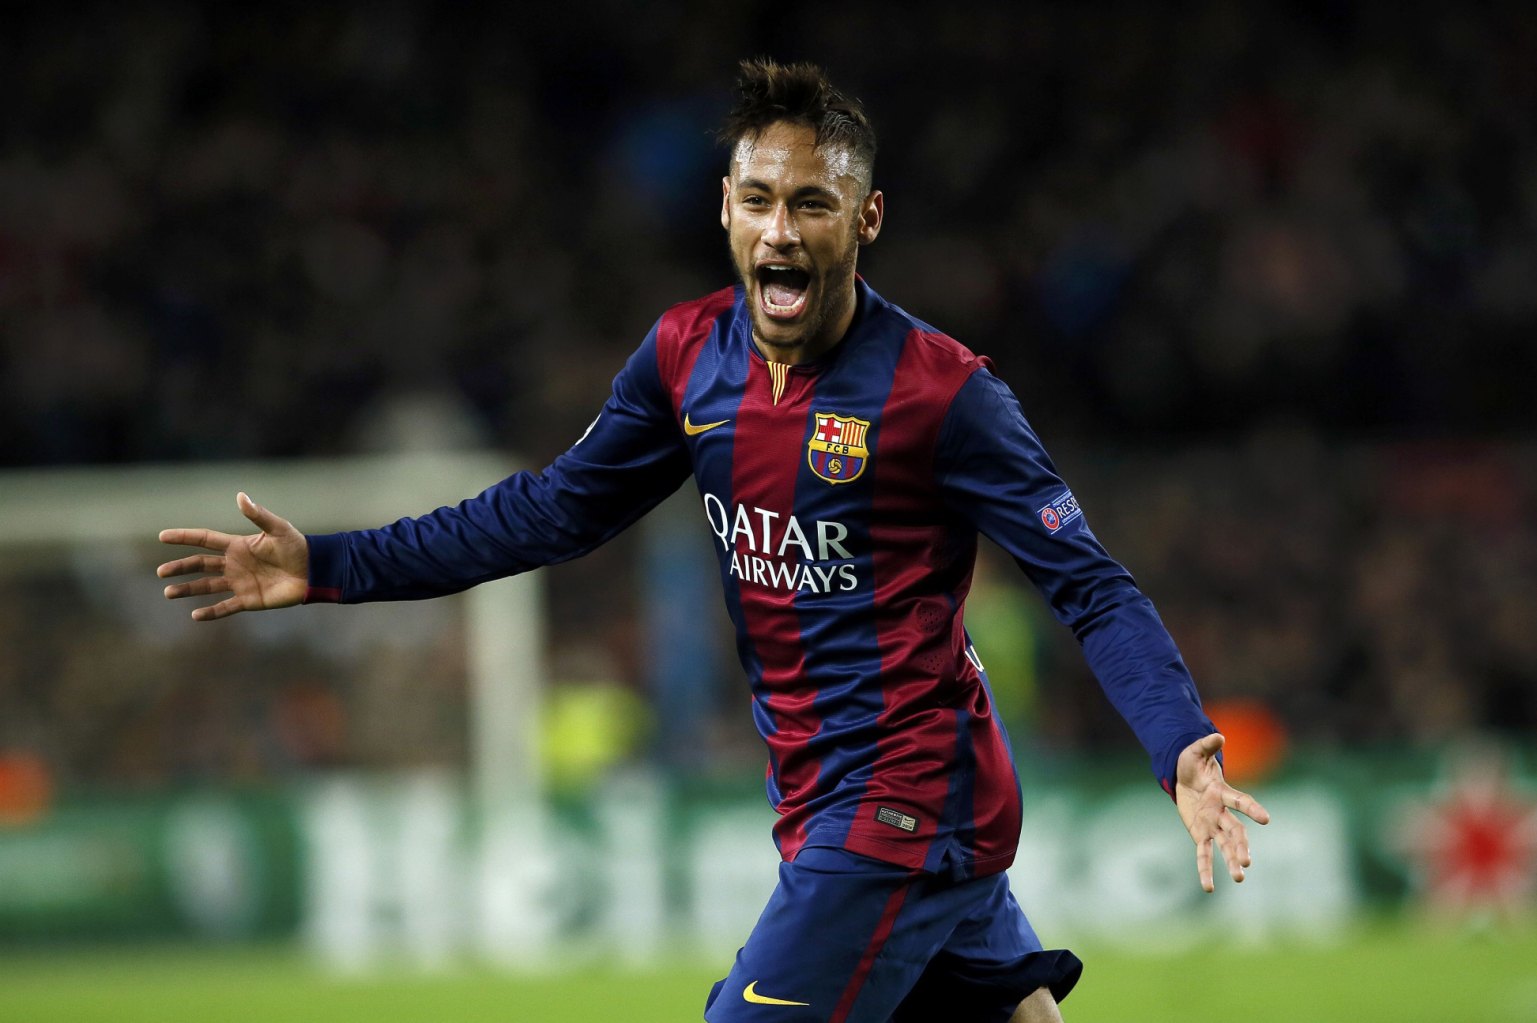 Neymar goal celebrations, after Barcelona beat PSG